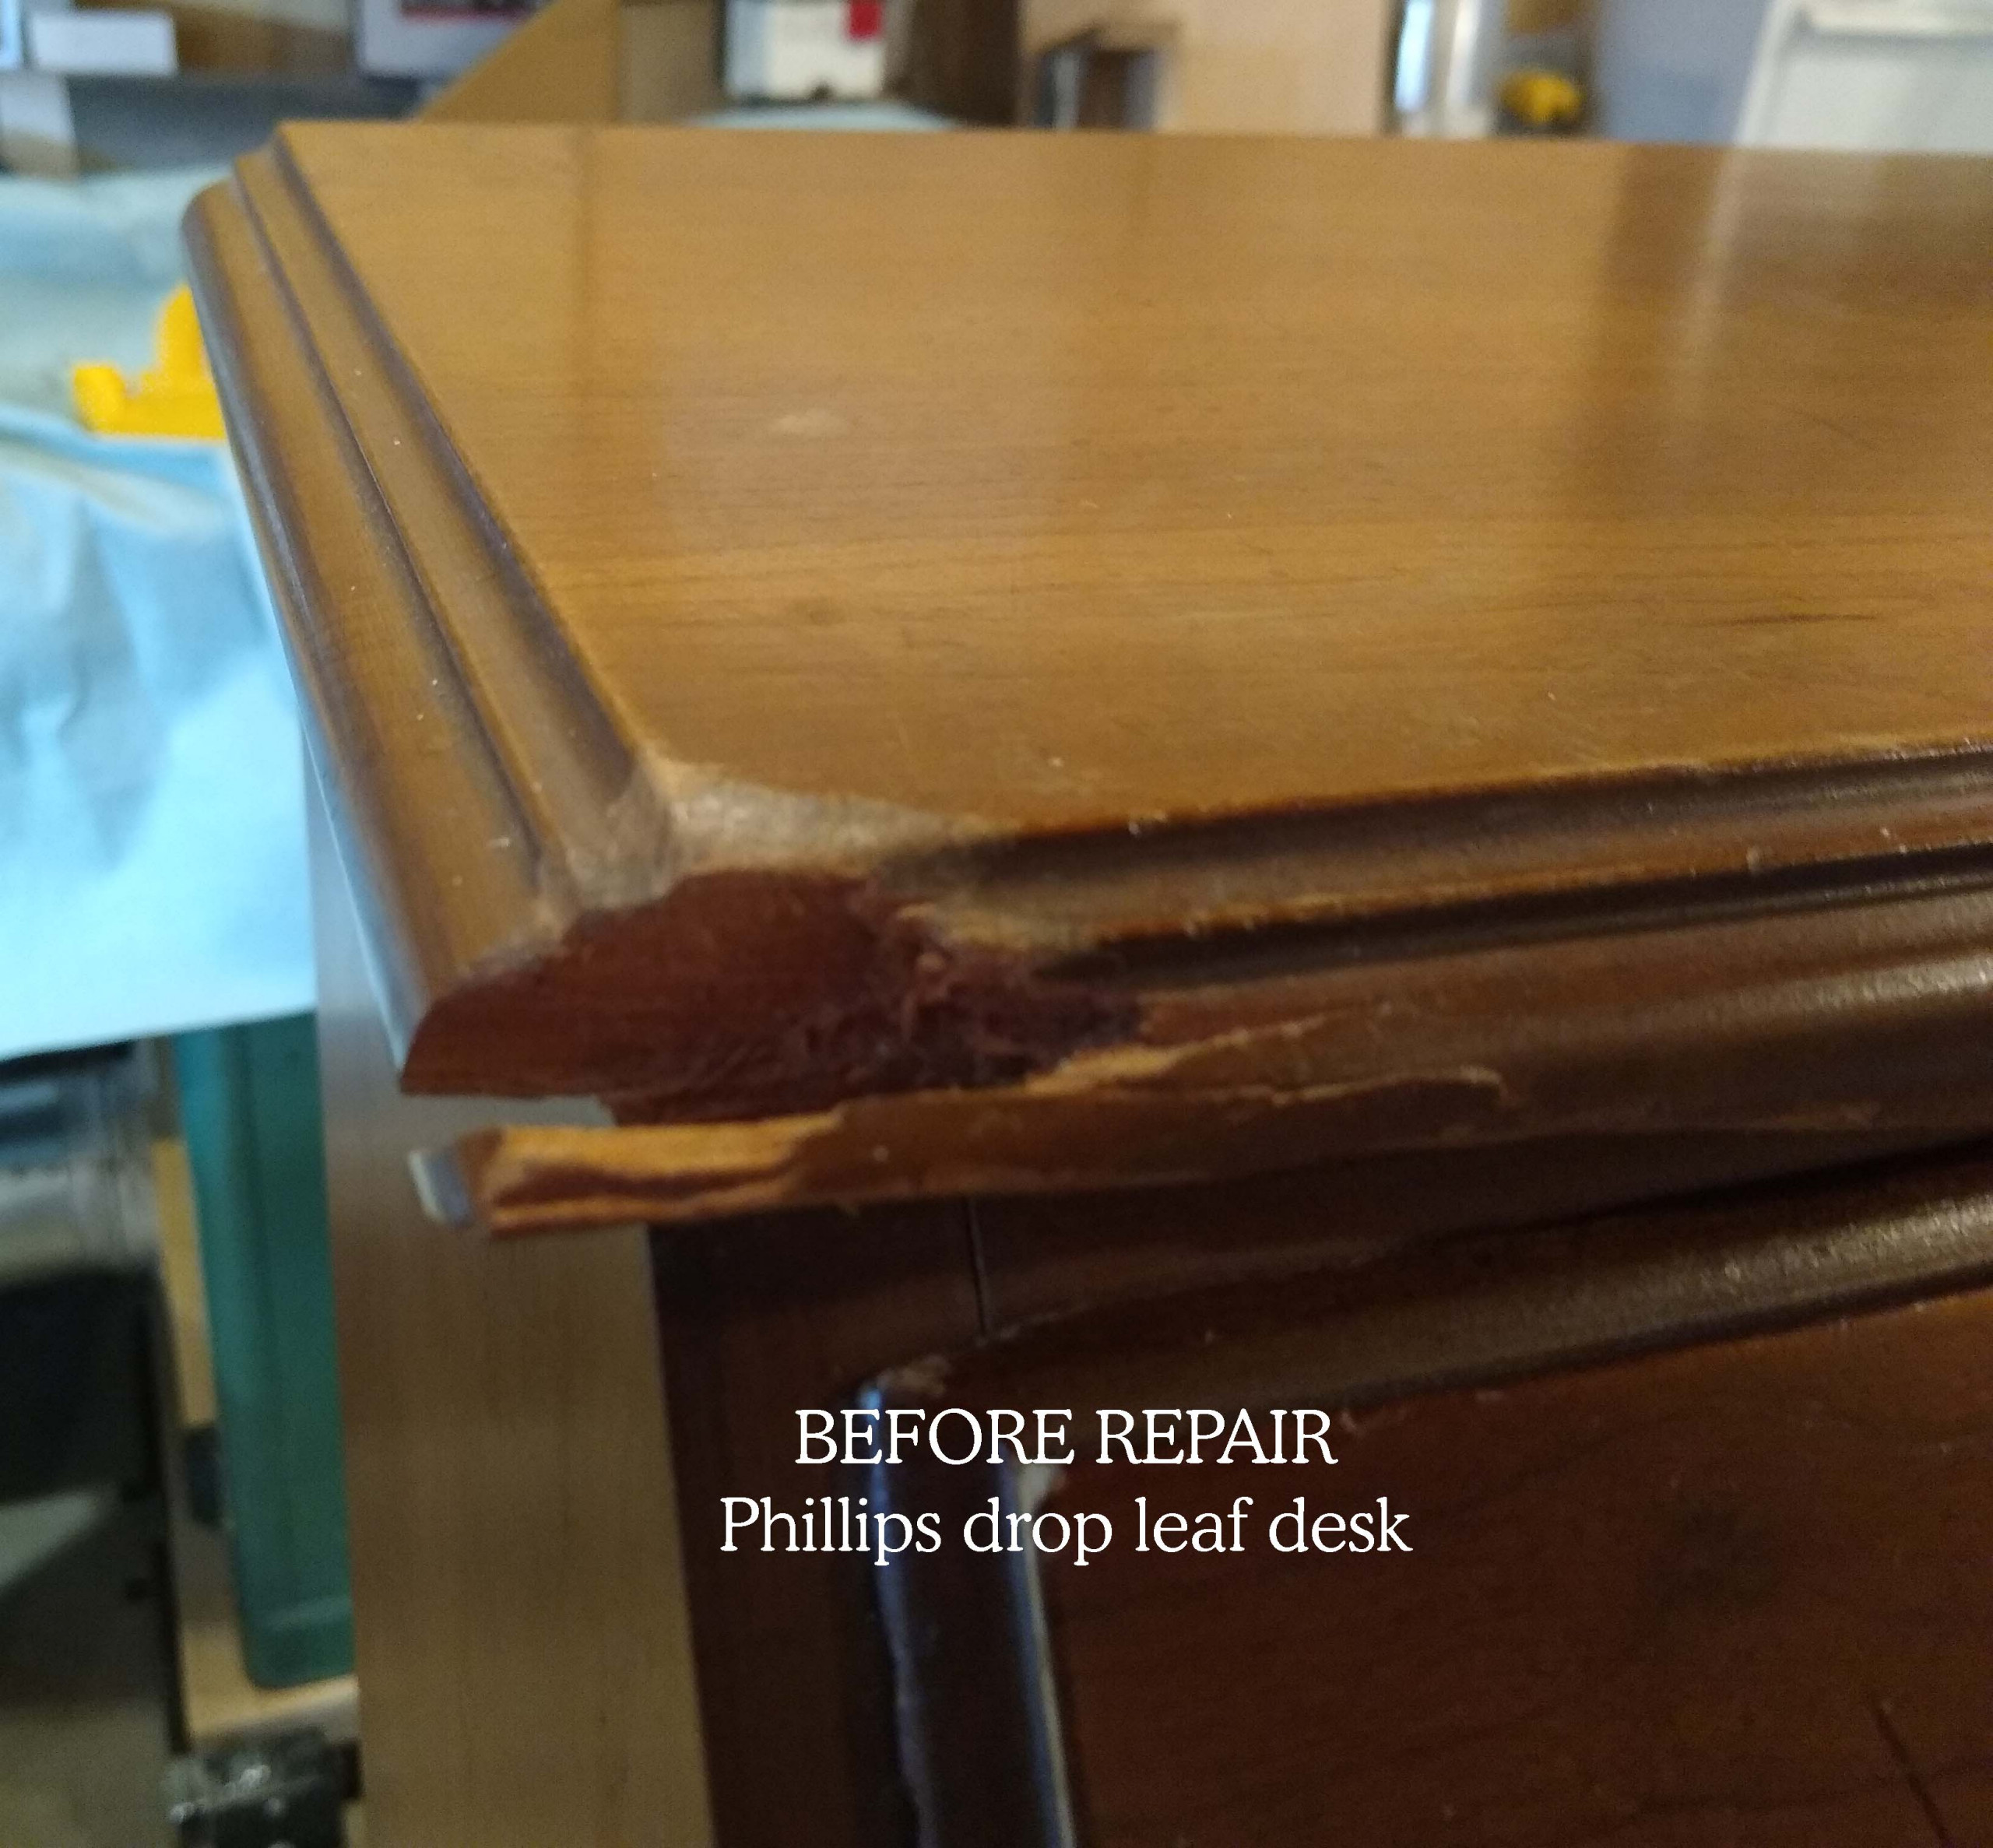 Phillips drop leaf desk repair